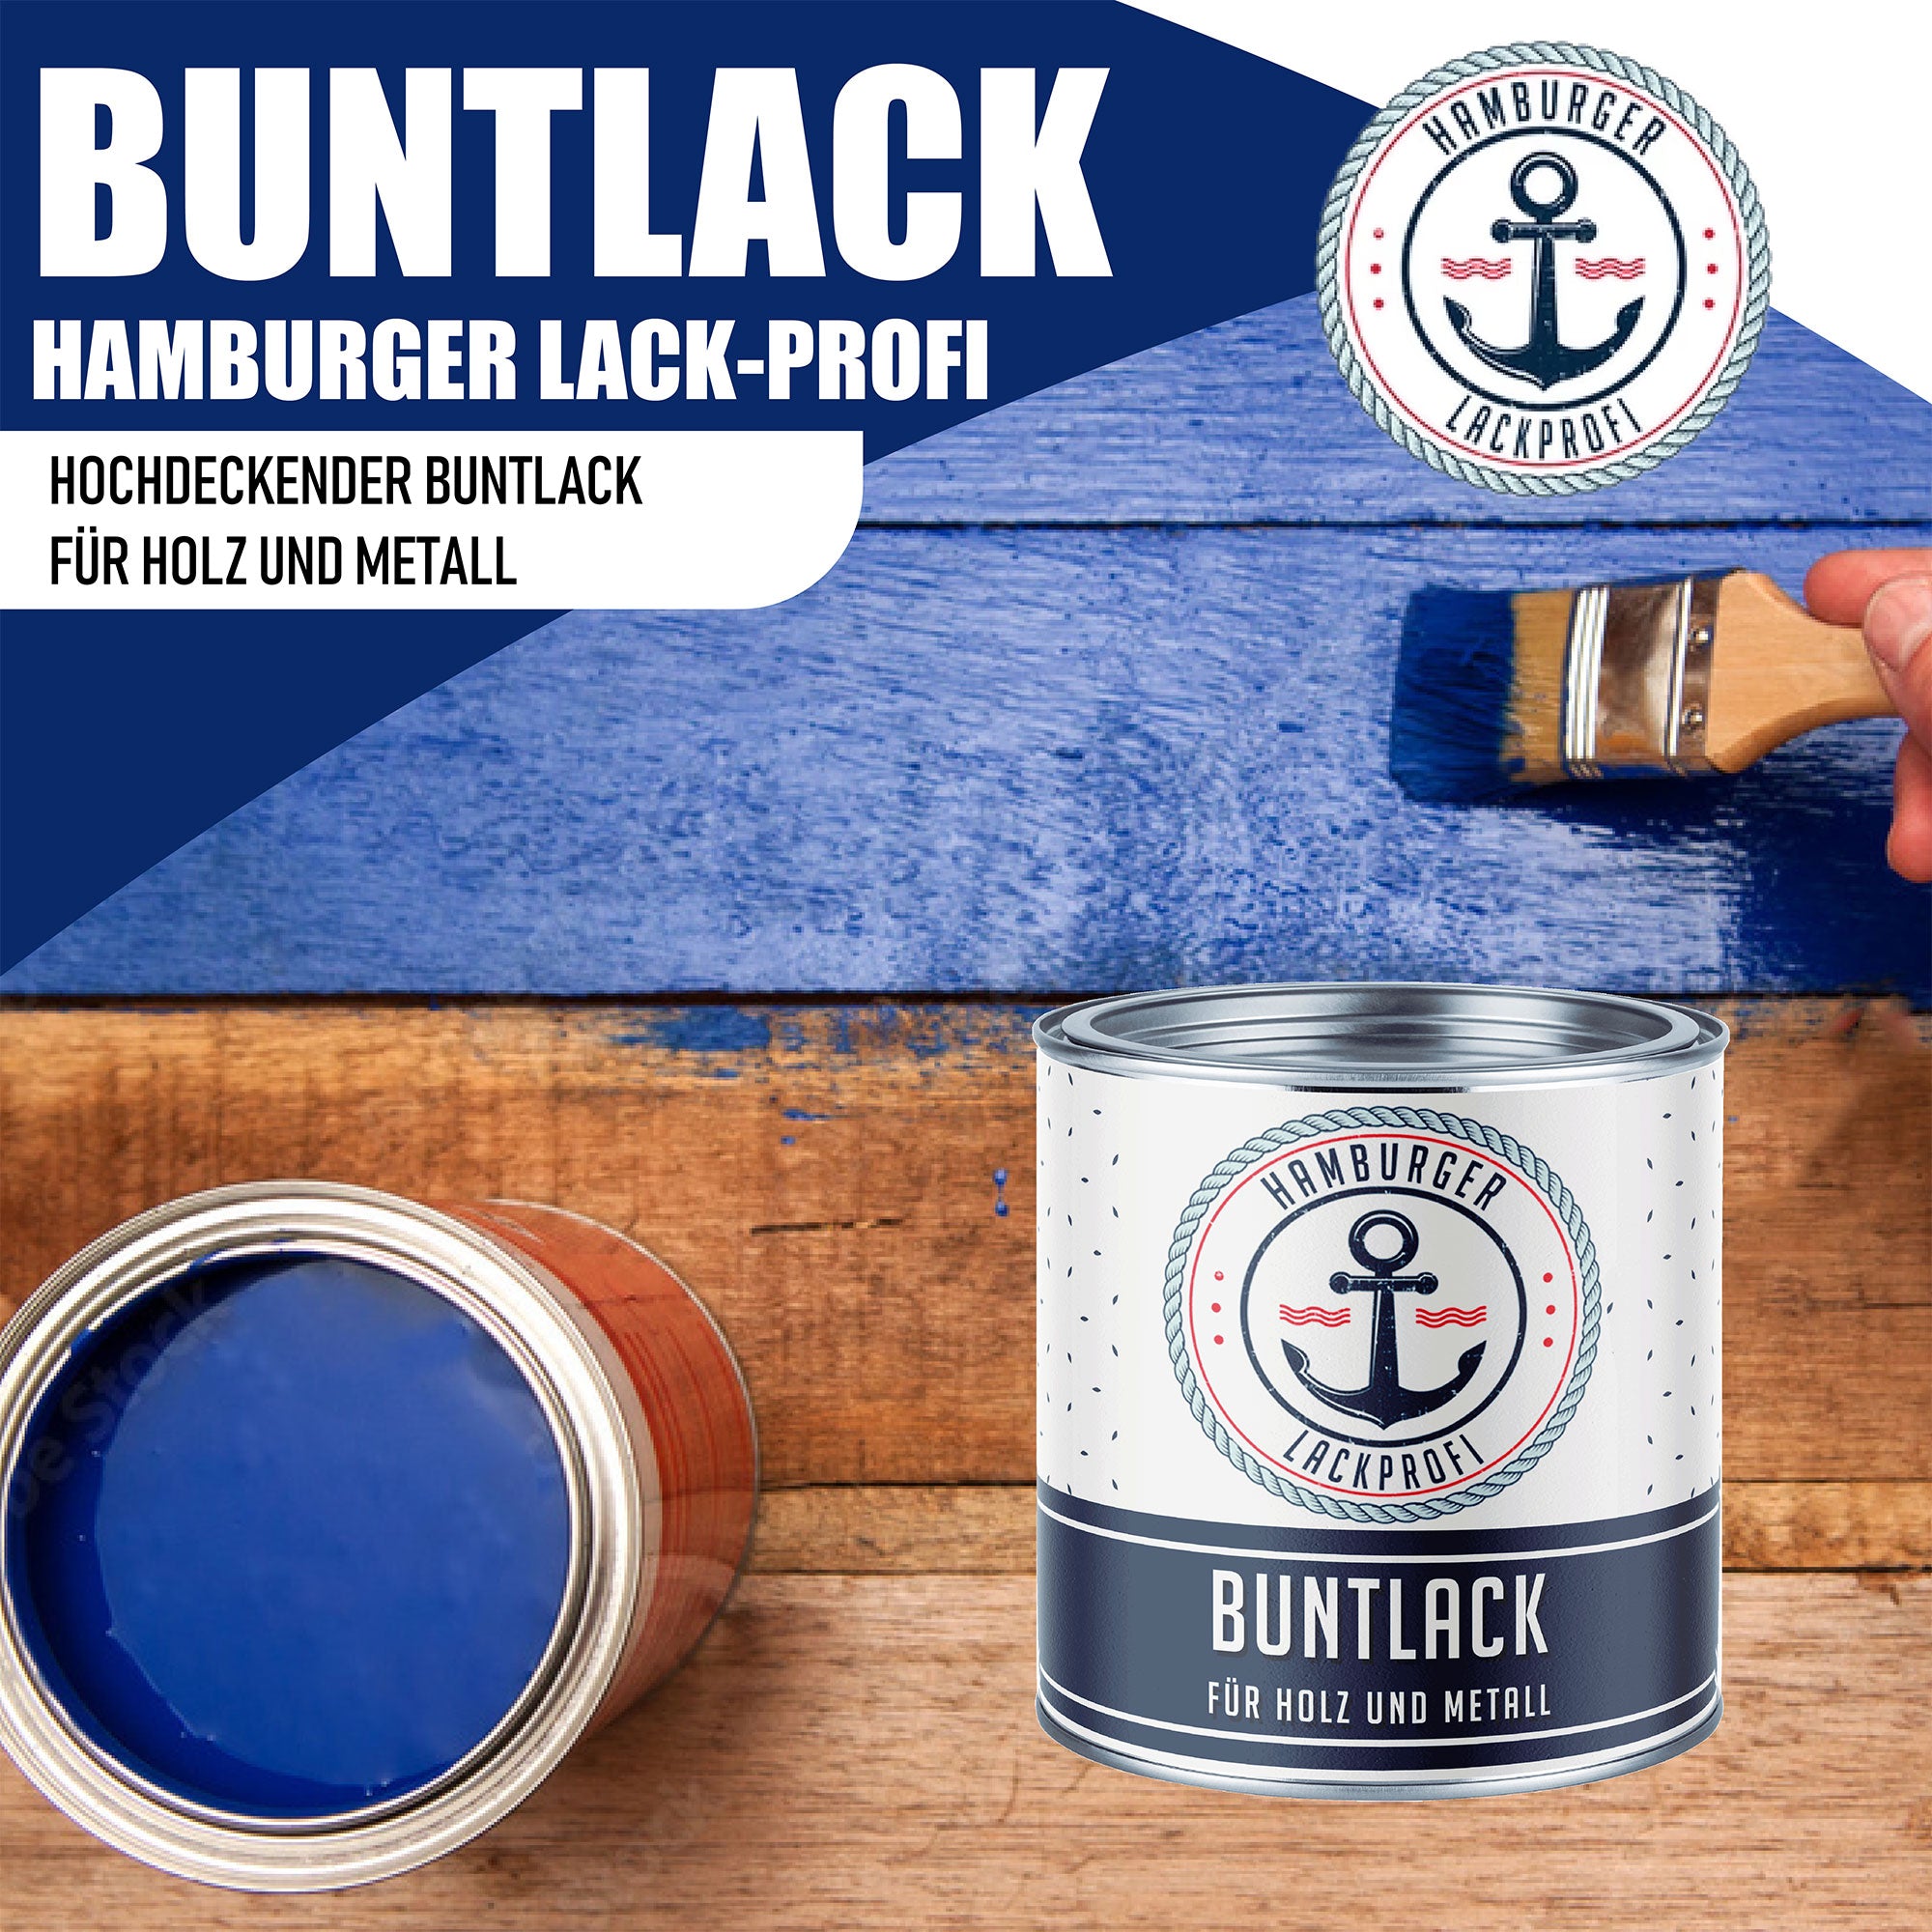 Hamburger Lack-Profi Buntlack Beige RAL 1001 - Robuster Kunstharzlack - Hamburger Lack-Profi